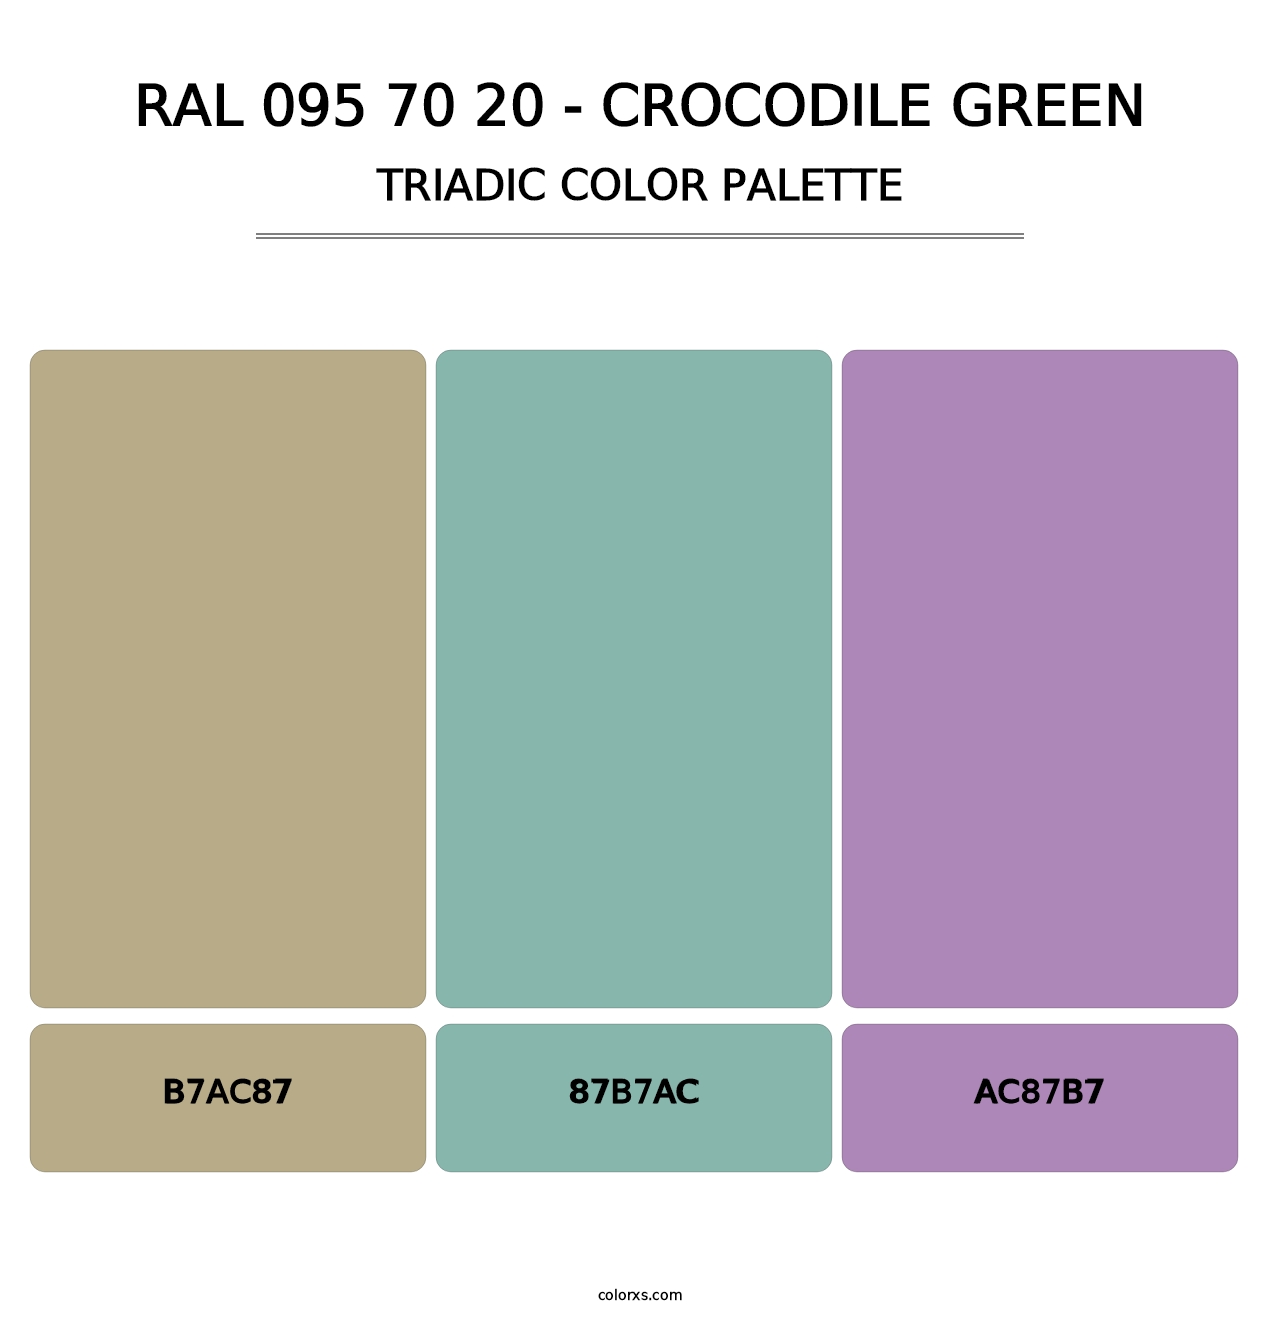 RAL 095 70 20 - Crocodile Green - Triadic Color Palette